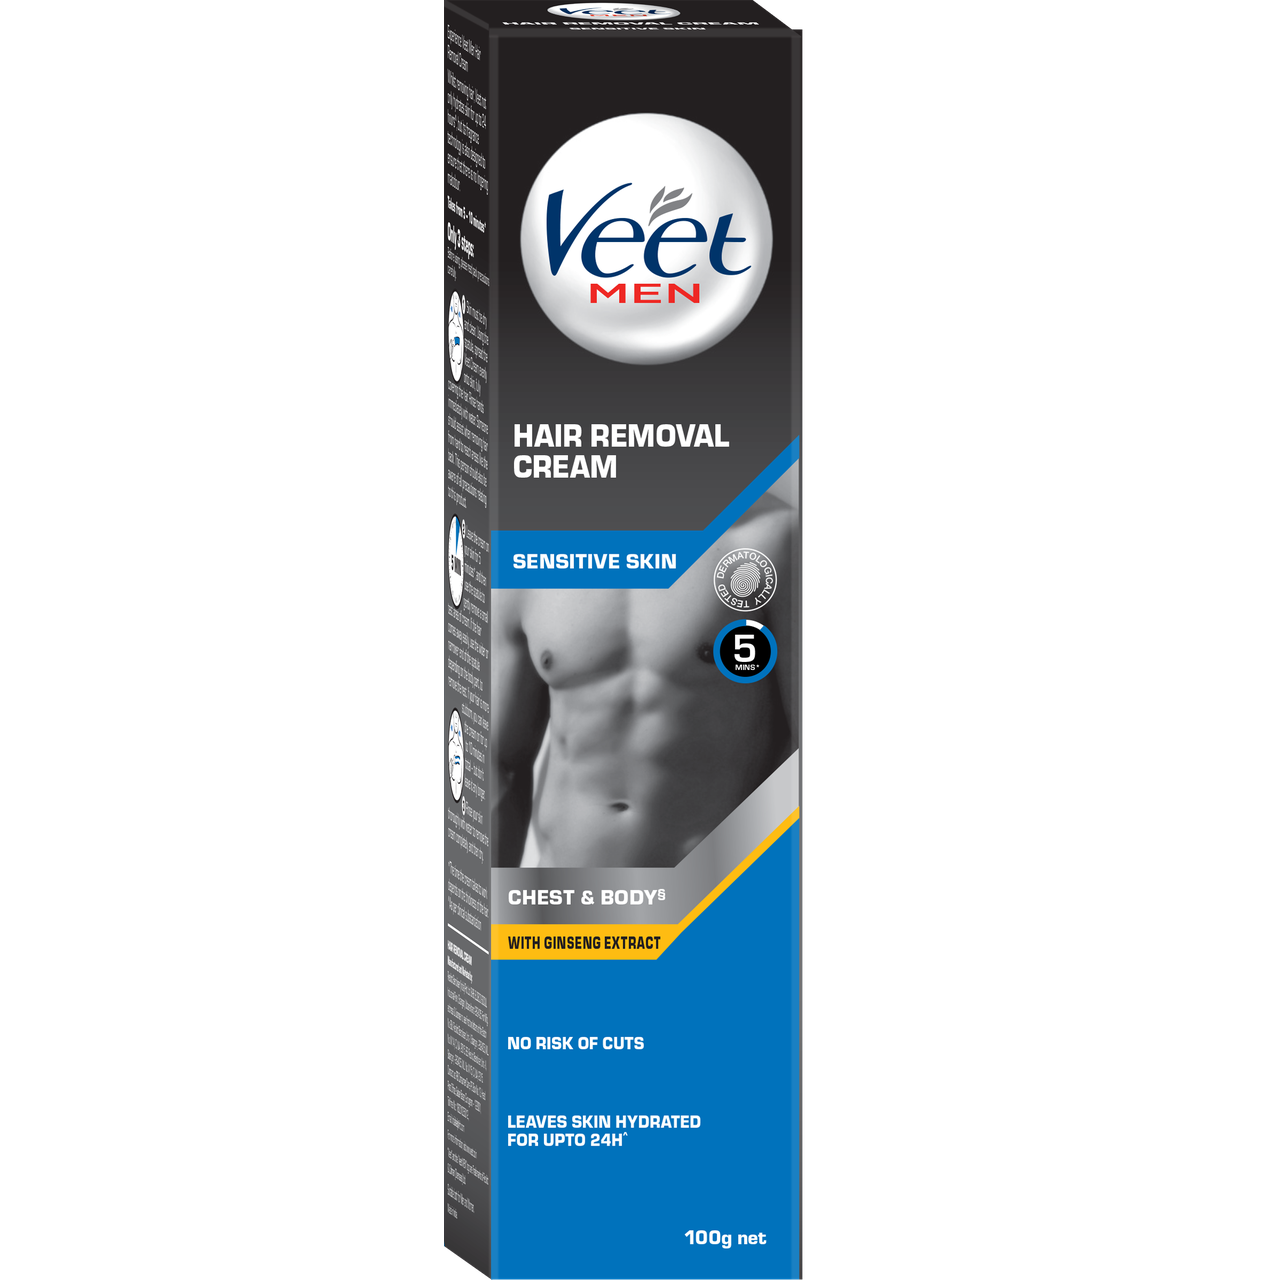 Betasten Afgeschaft In zoomen Buy Veet Men Hair Removal Cream, Sensitive Skin Cream, 100g Pack